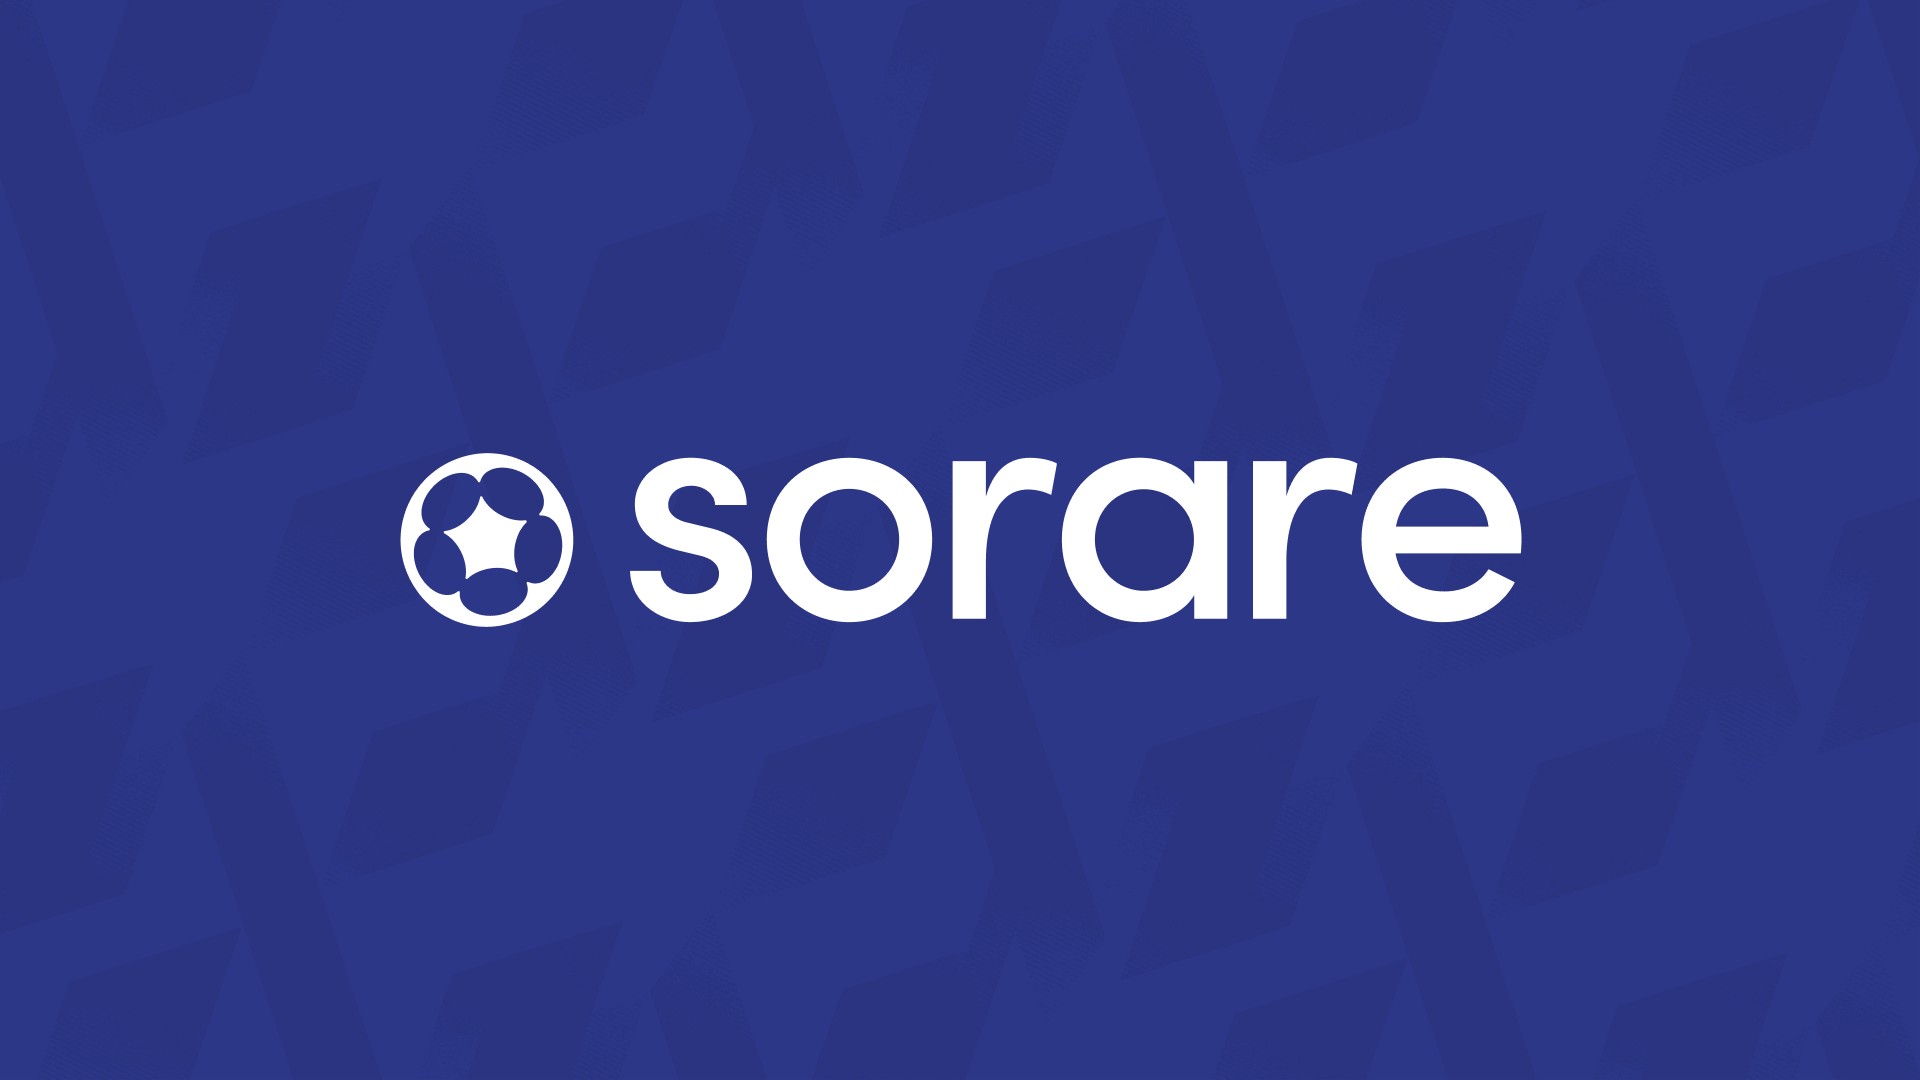 Sorare: An NFT-based Fantasy Football Game